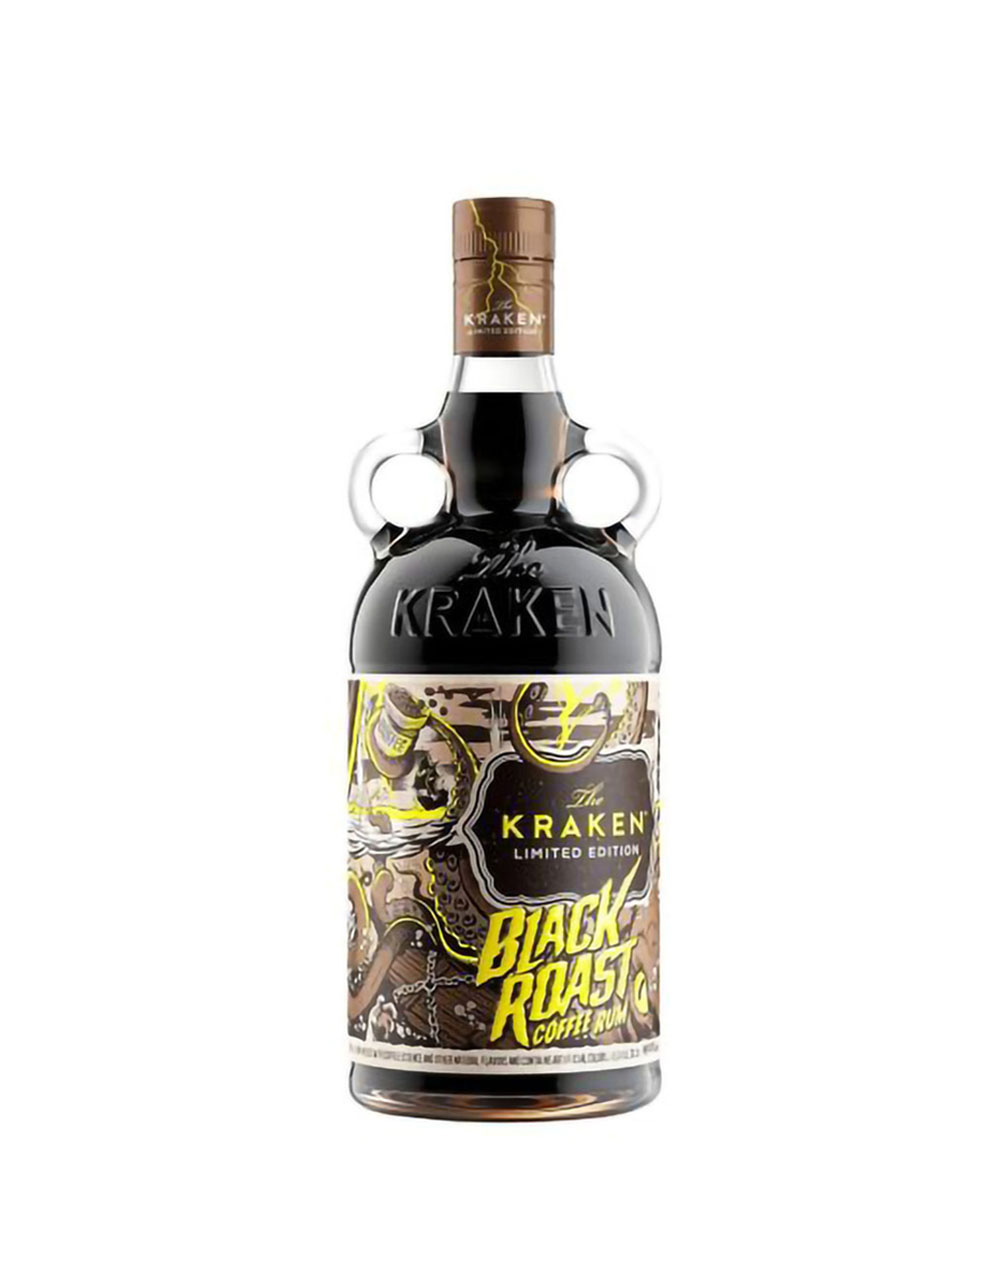 The Kraken Black Roast Coffee Rum Limited Edition